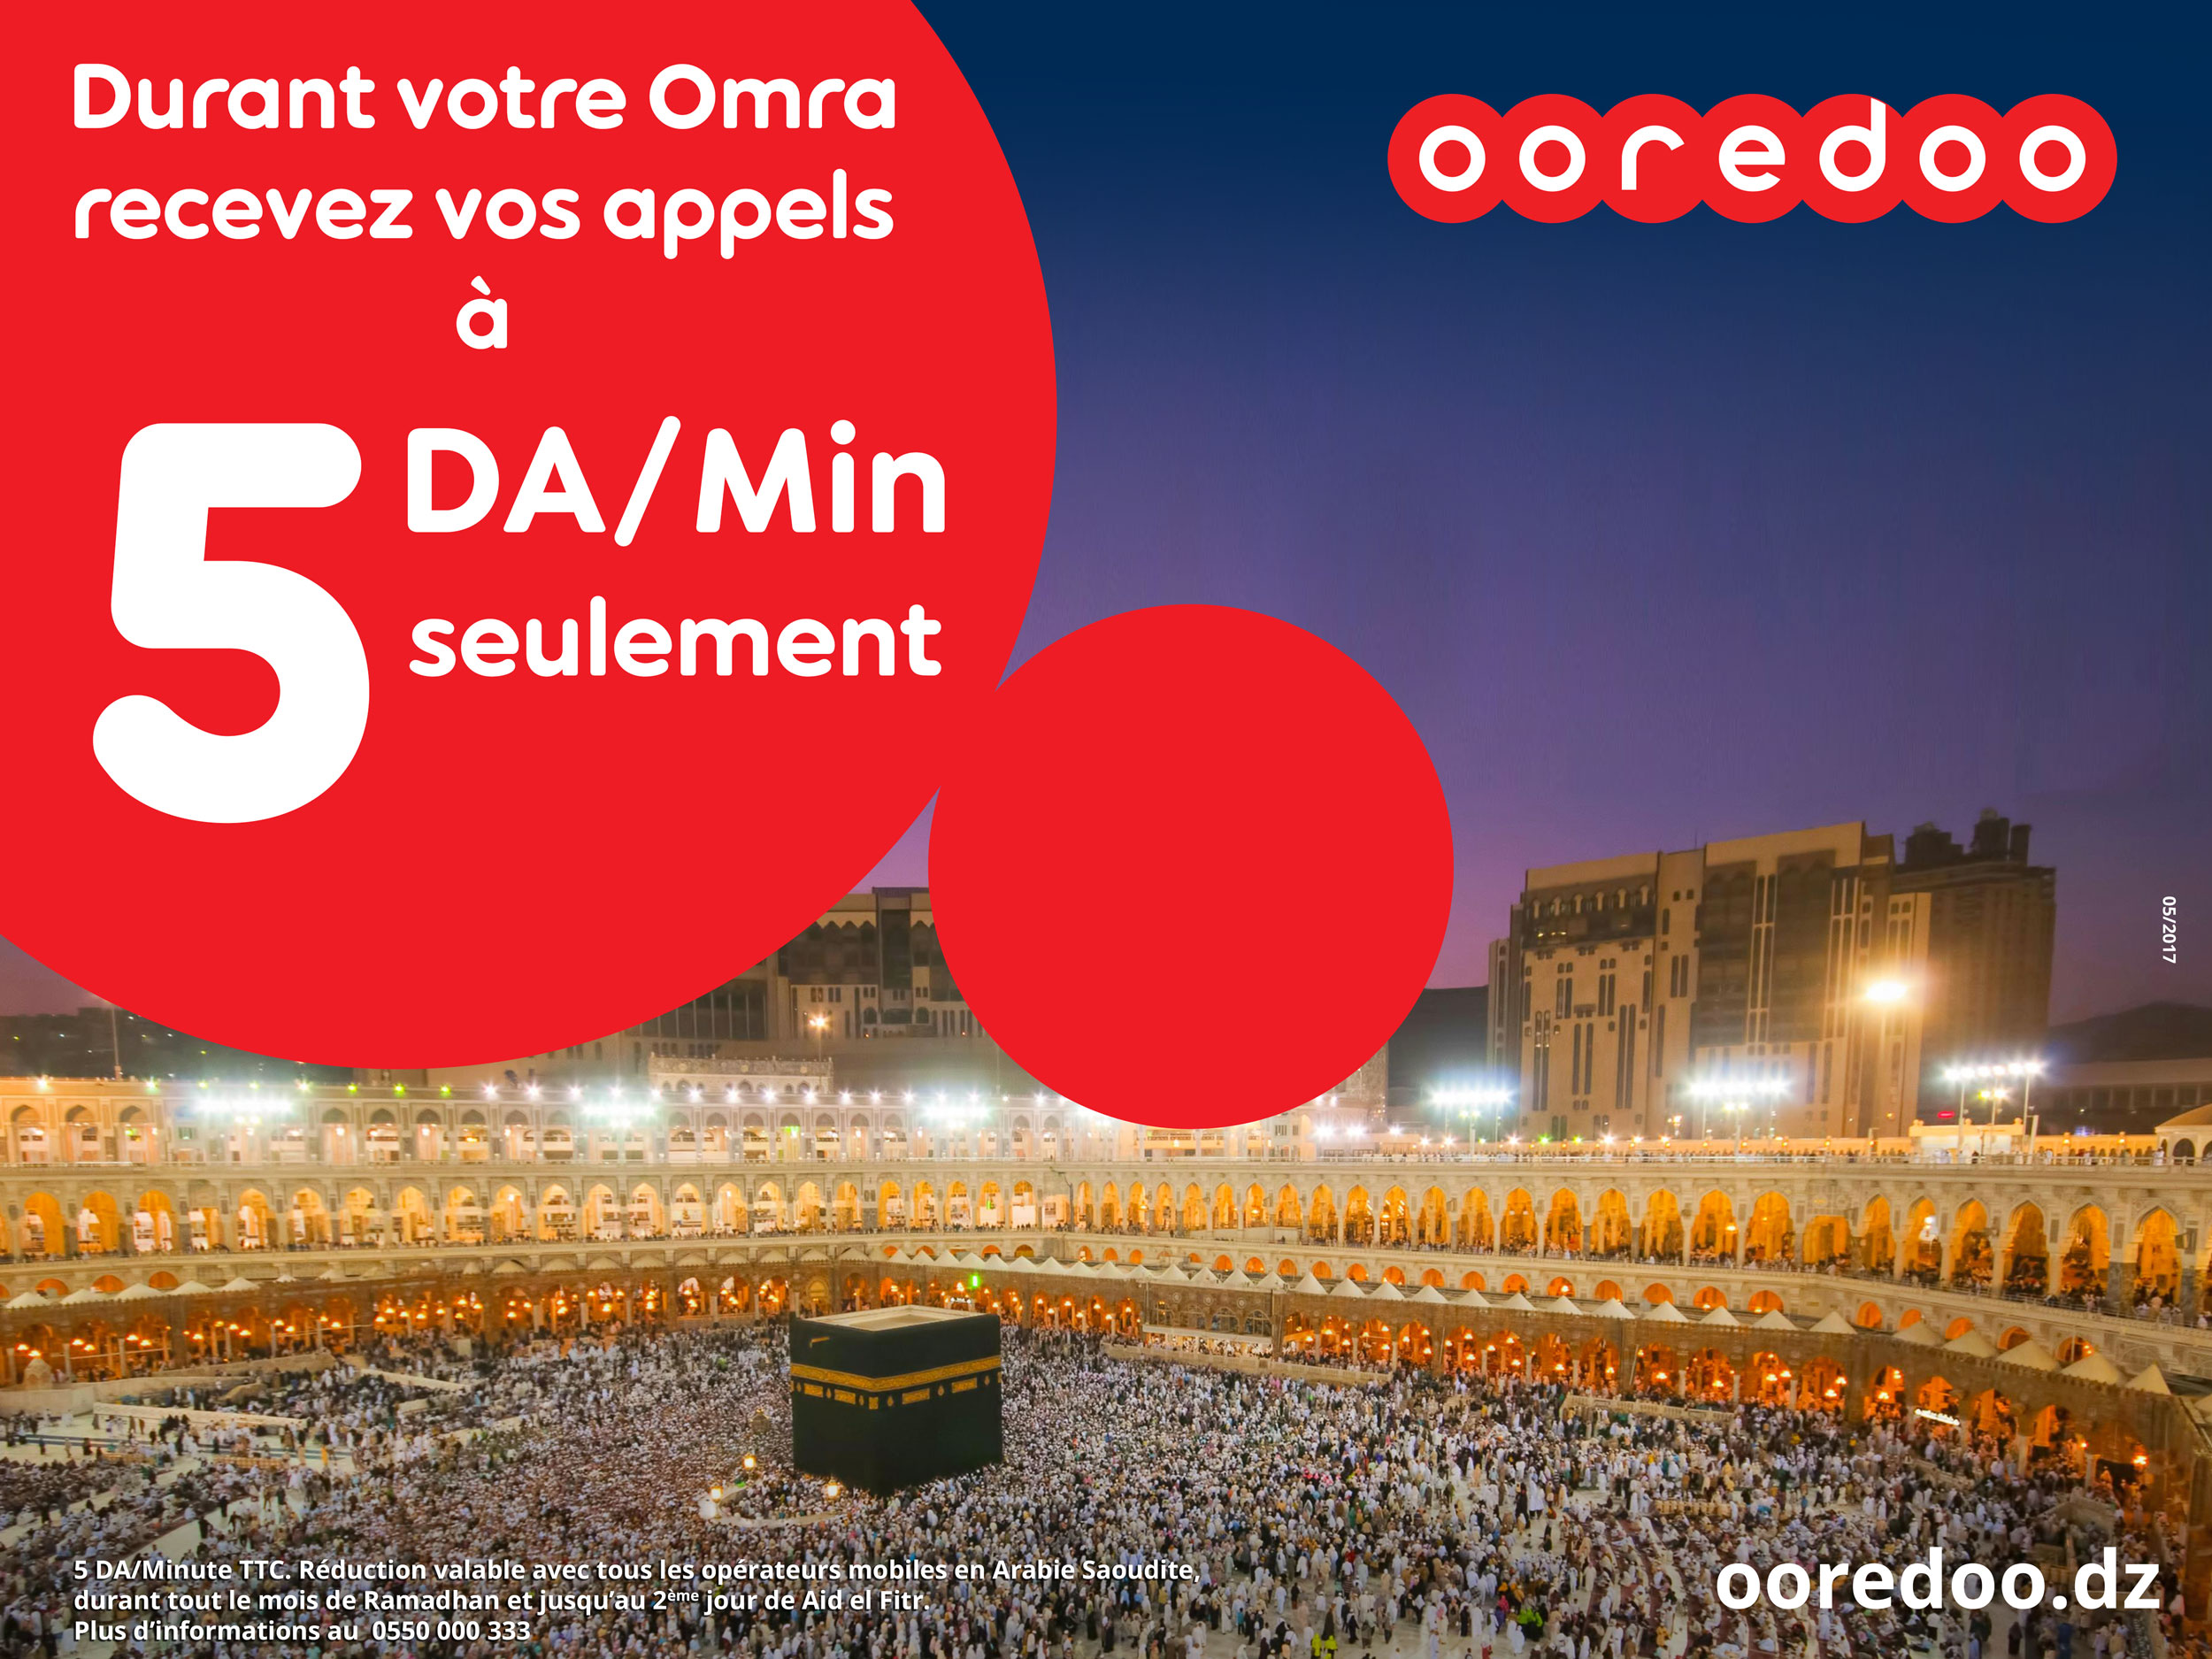 Photo - Ooredoo baisse ses tarifs roaming durant la Omra.jpg